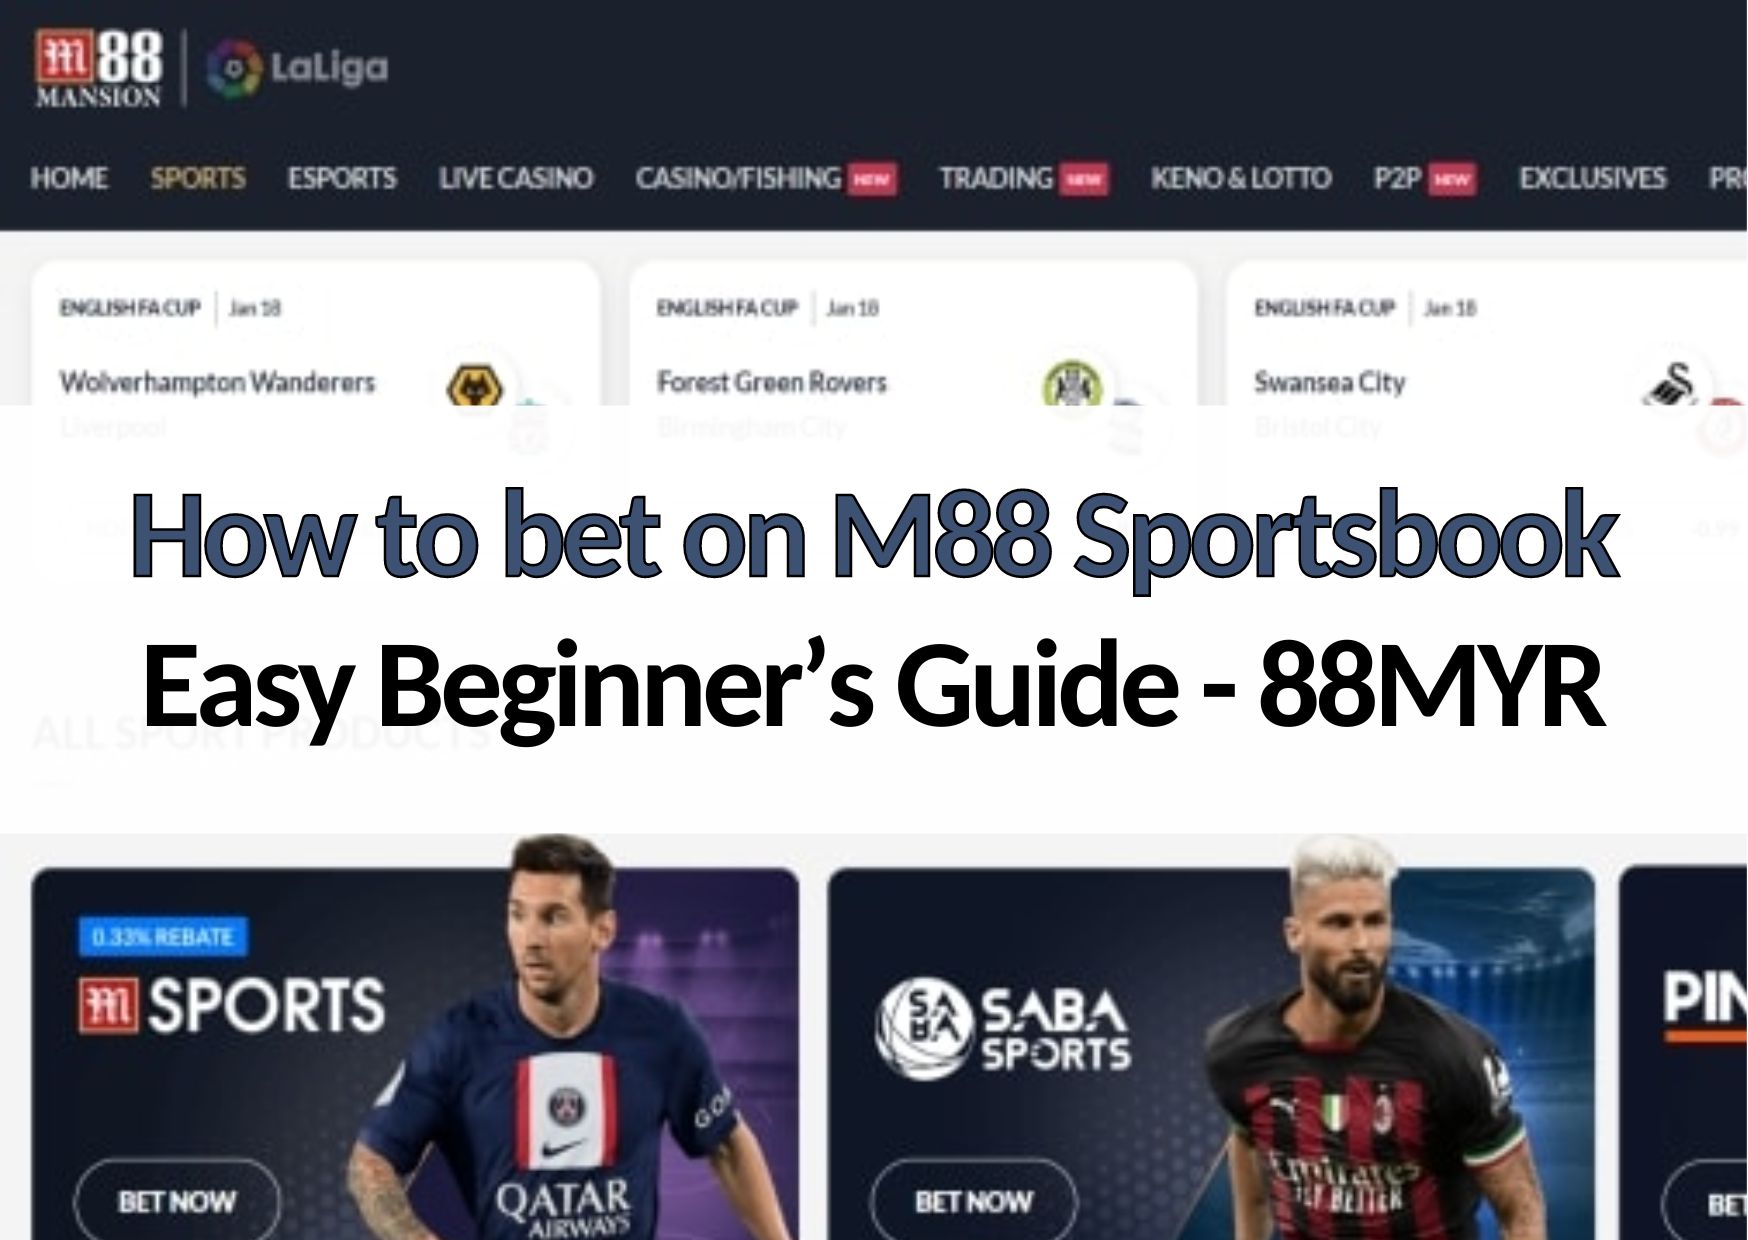 88myr how to bet on m88 sportsbook beginner guide